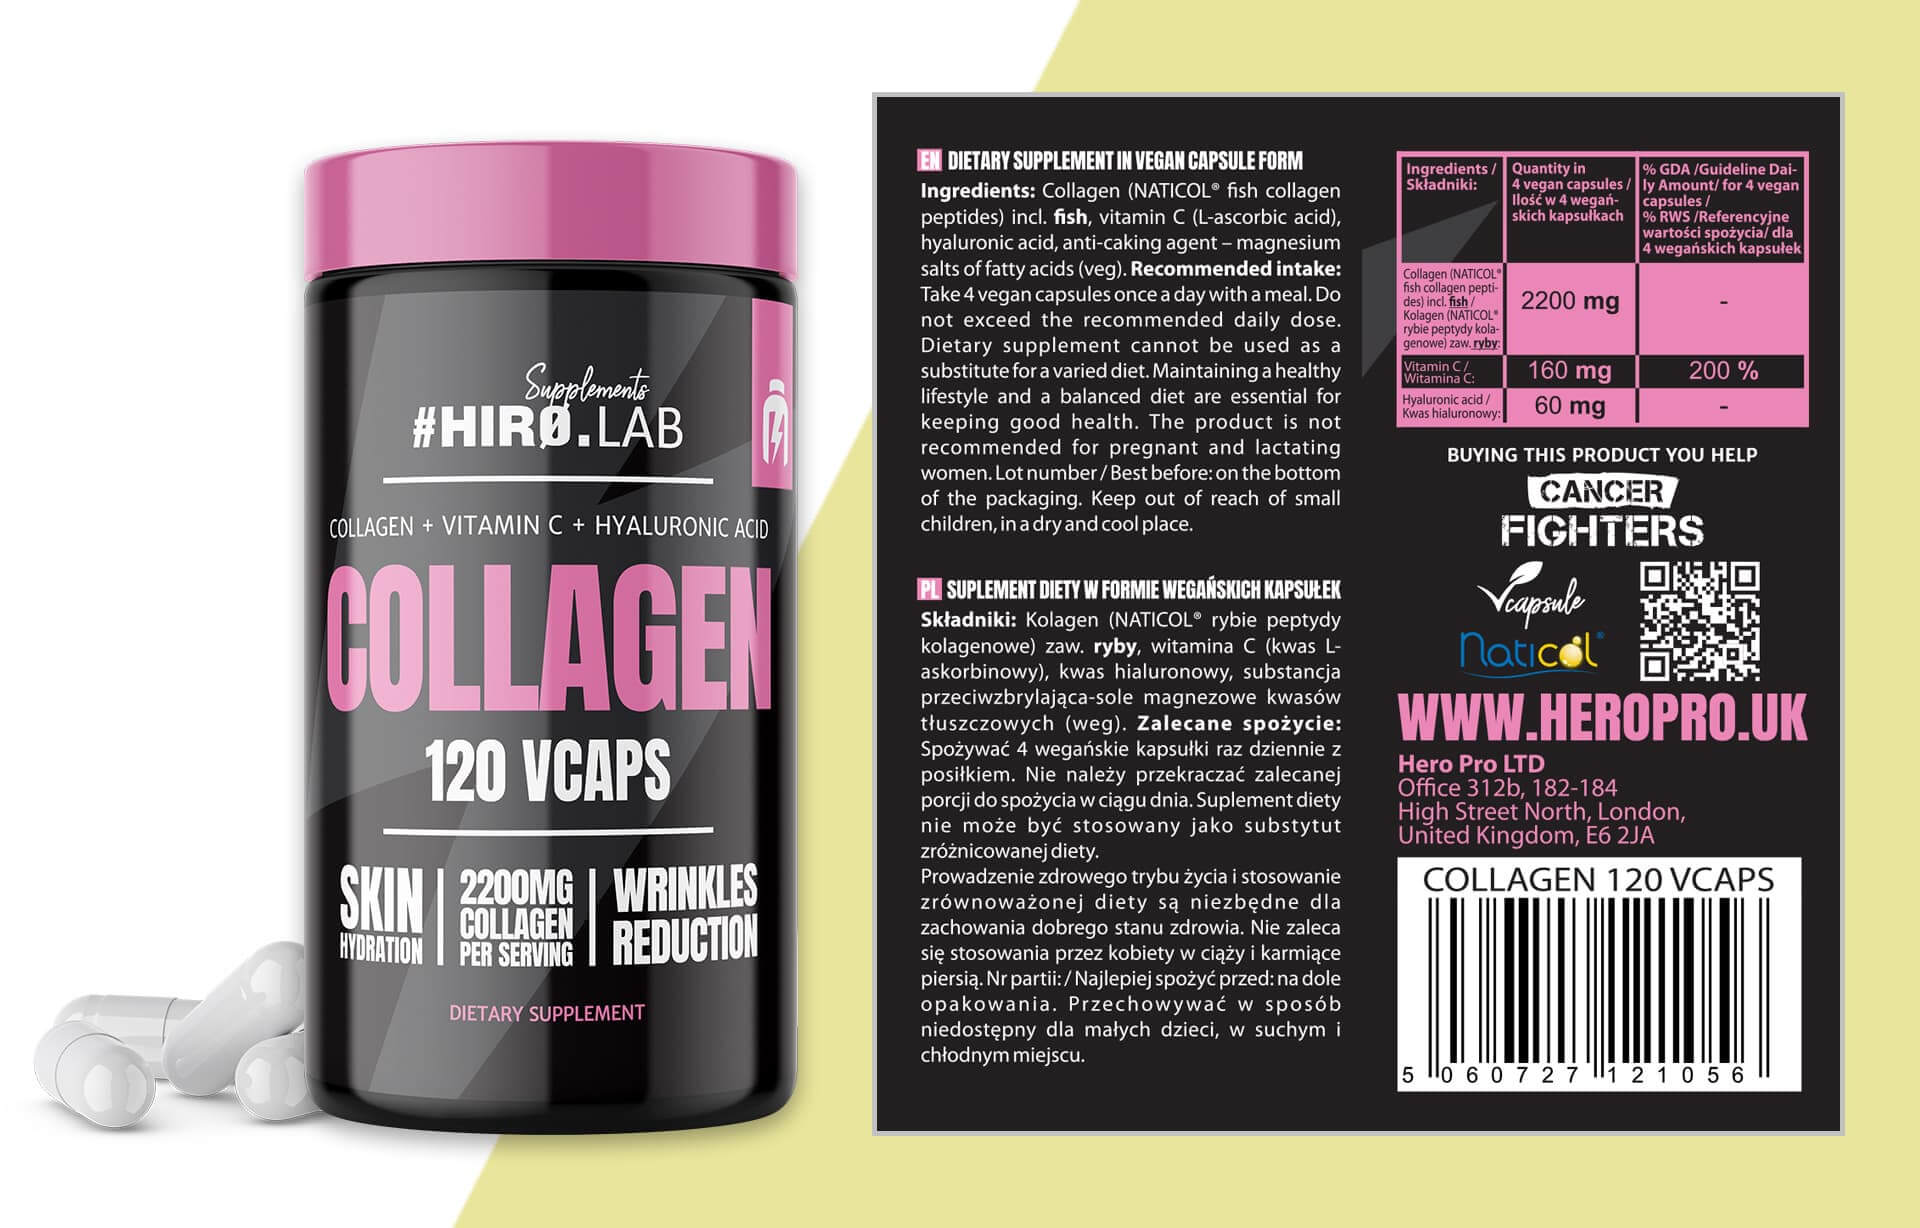 HIRO.LAB Collagen 120 Vcaps facts